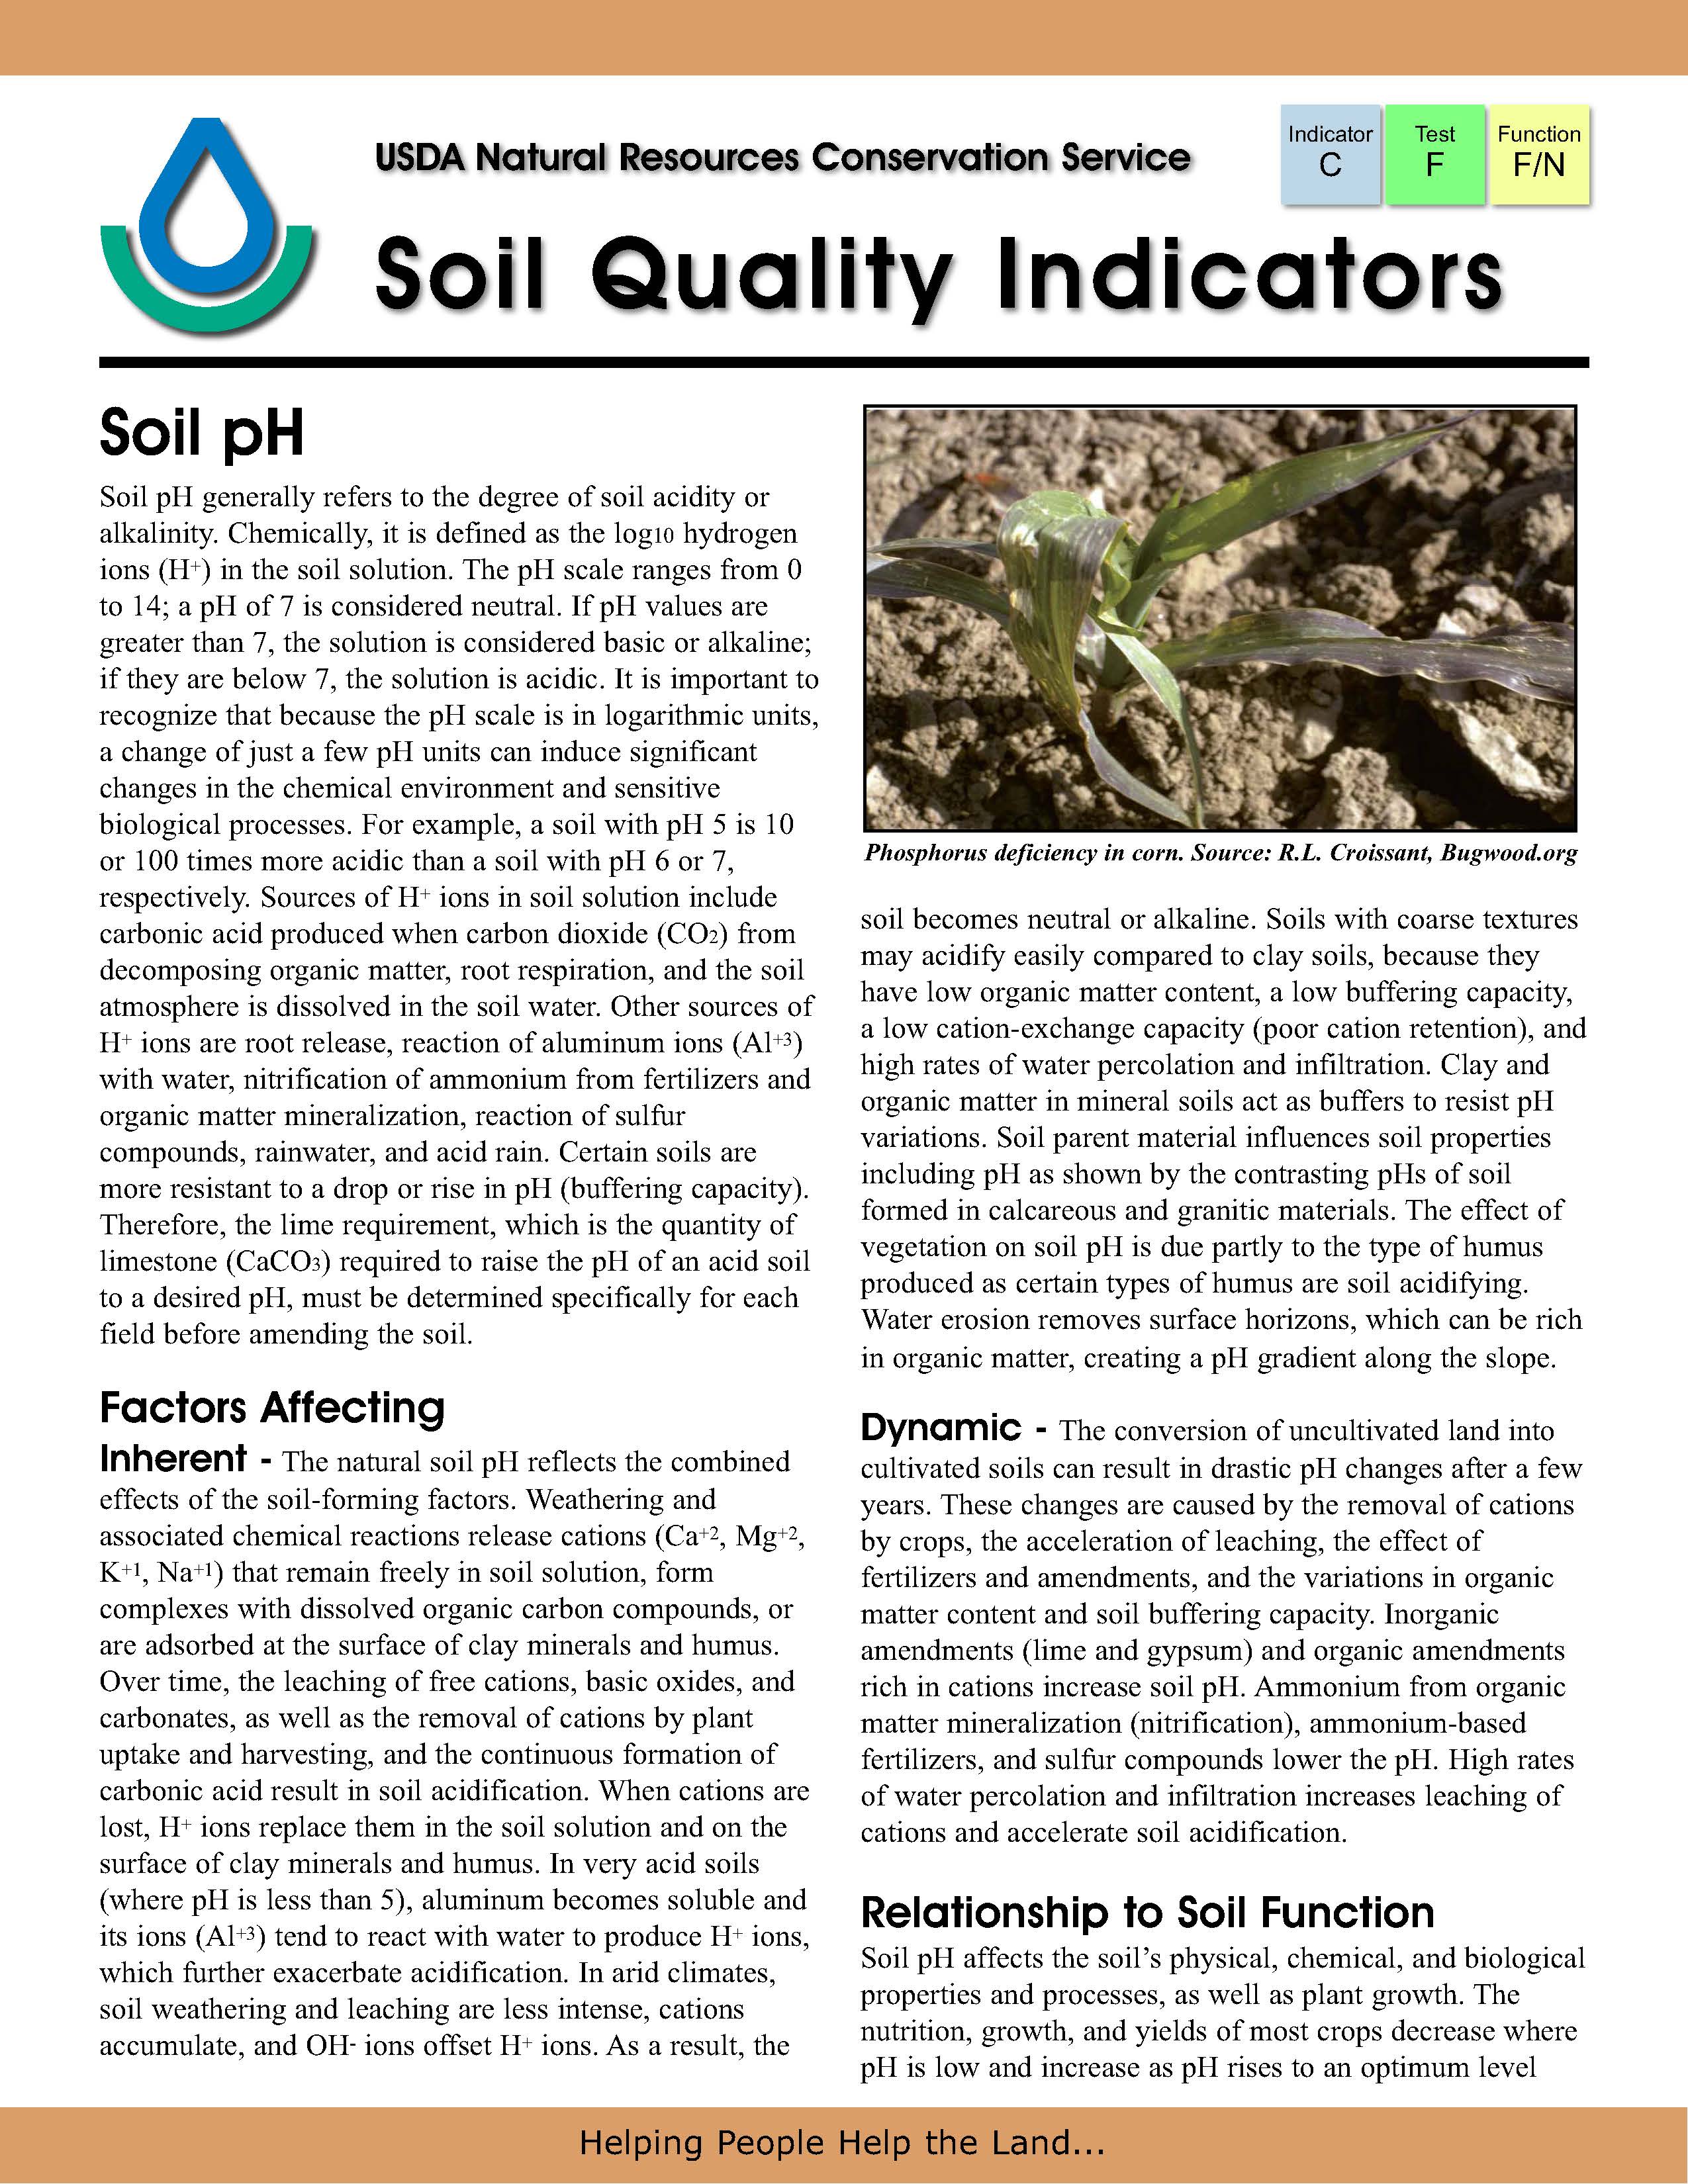 SQ-Indicators-Soil Ph